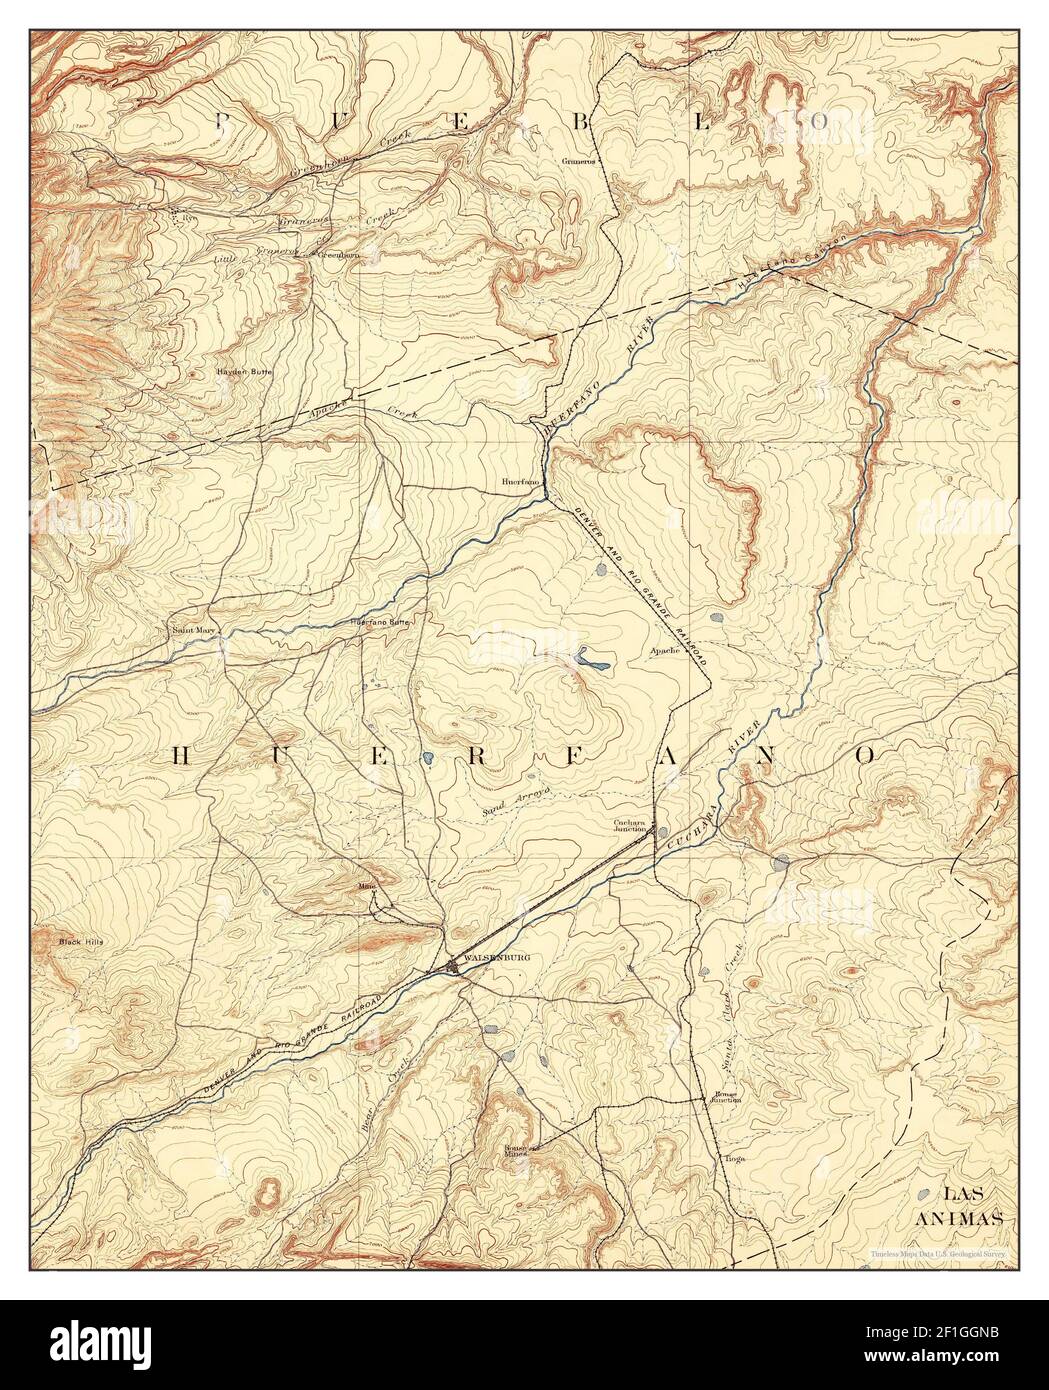 Walsenburg, Colorado, map 1894, 1:125000, United States of America by Timeless Maps, data U.S. Geological Survey Stock Photo